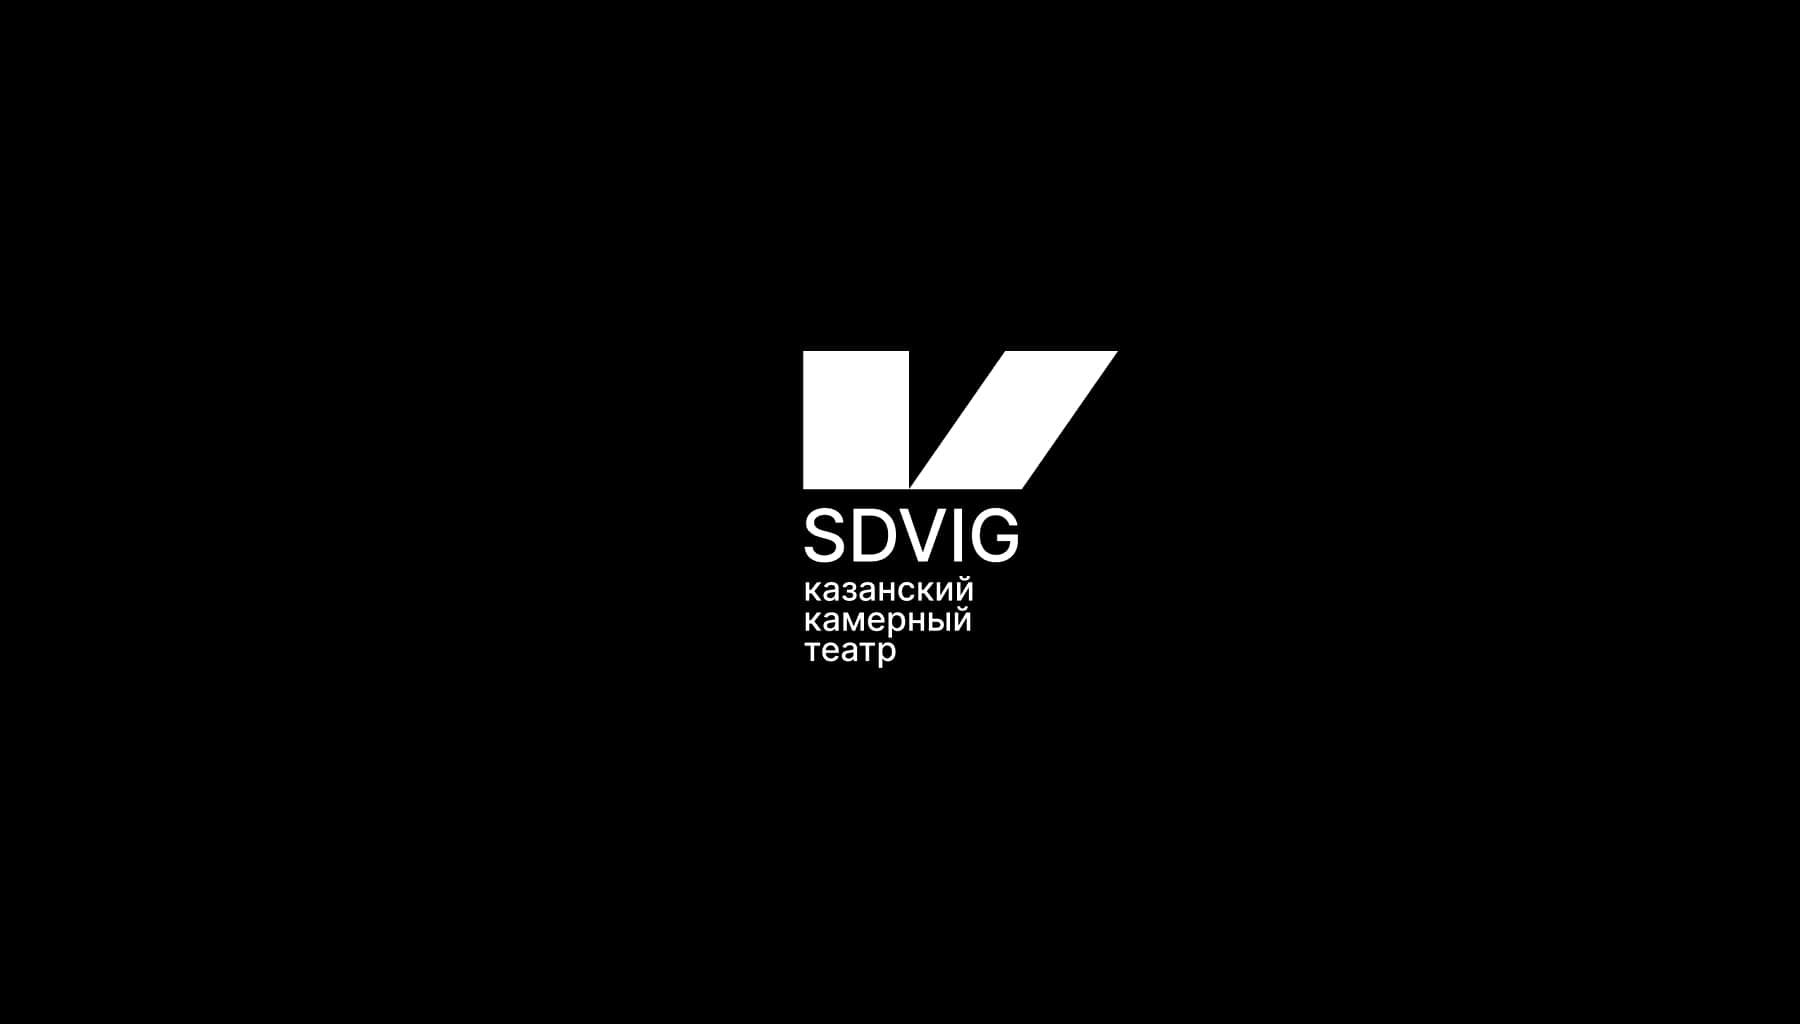 Rebranding SDVIG Theater’s Visual Identity